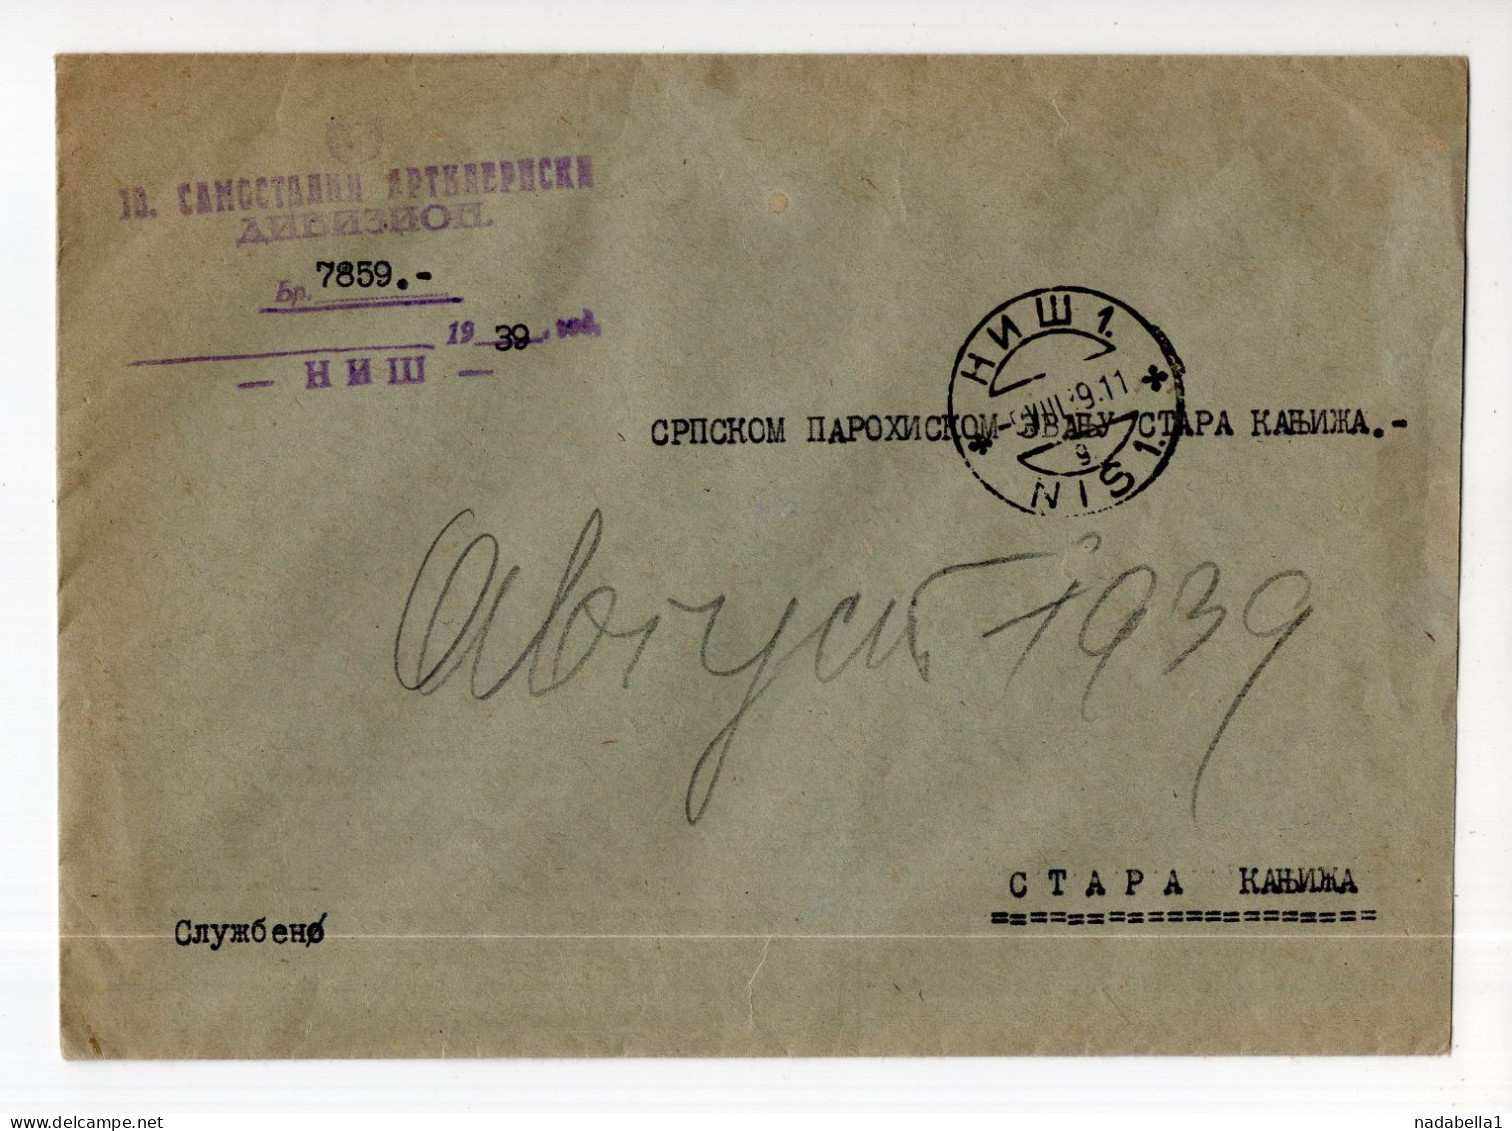 1939. YUGOSLAVIA,SERBIA,NIŠ TO ARCHBISHOP'S OFFICE STARA KANJIZA,OFFICIALS,MILITARY COVER,DIVISION COMMAND - Service